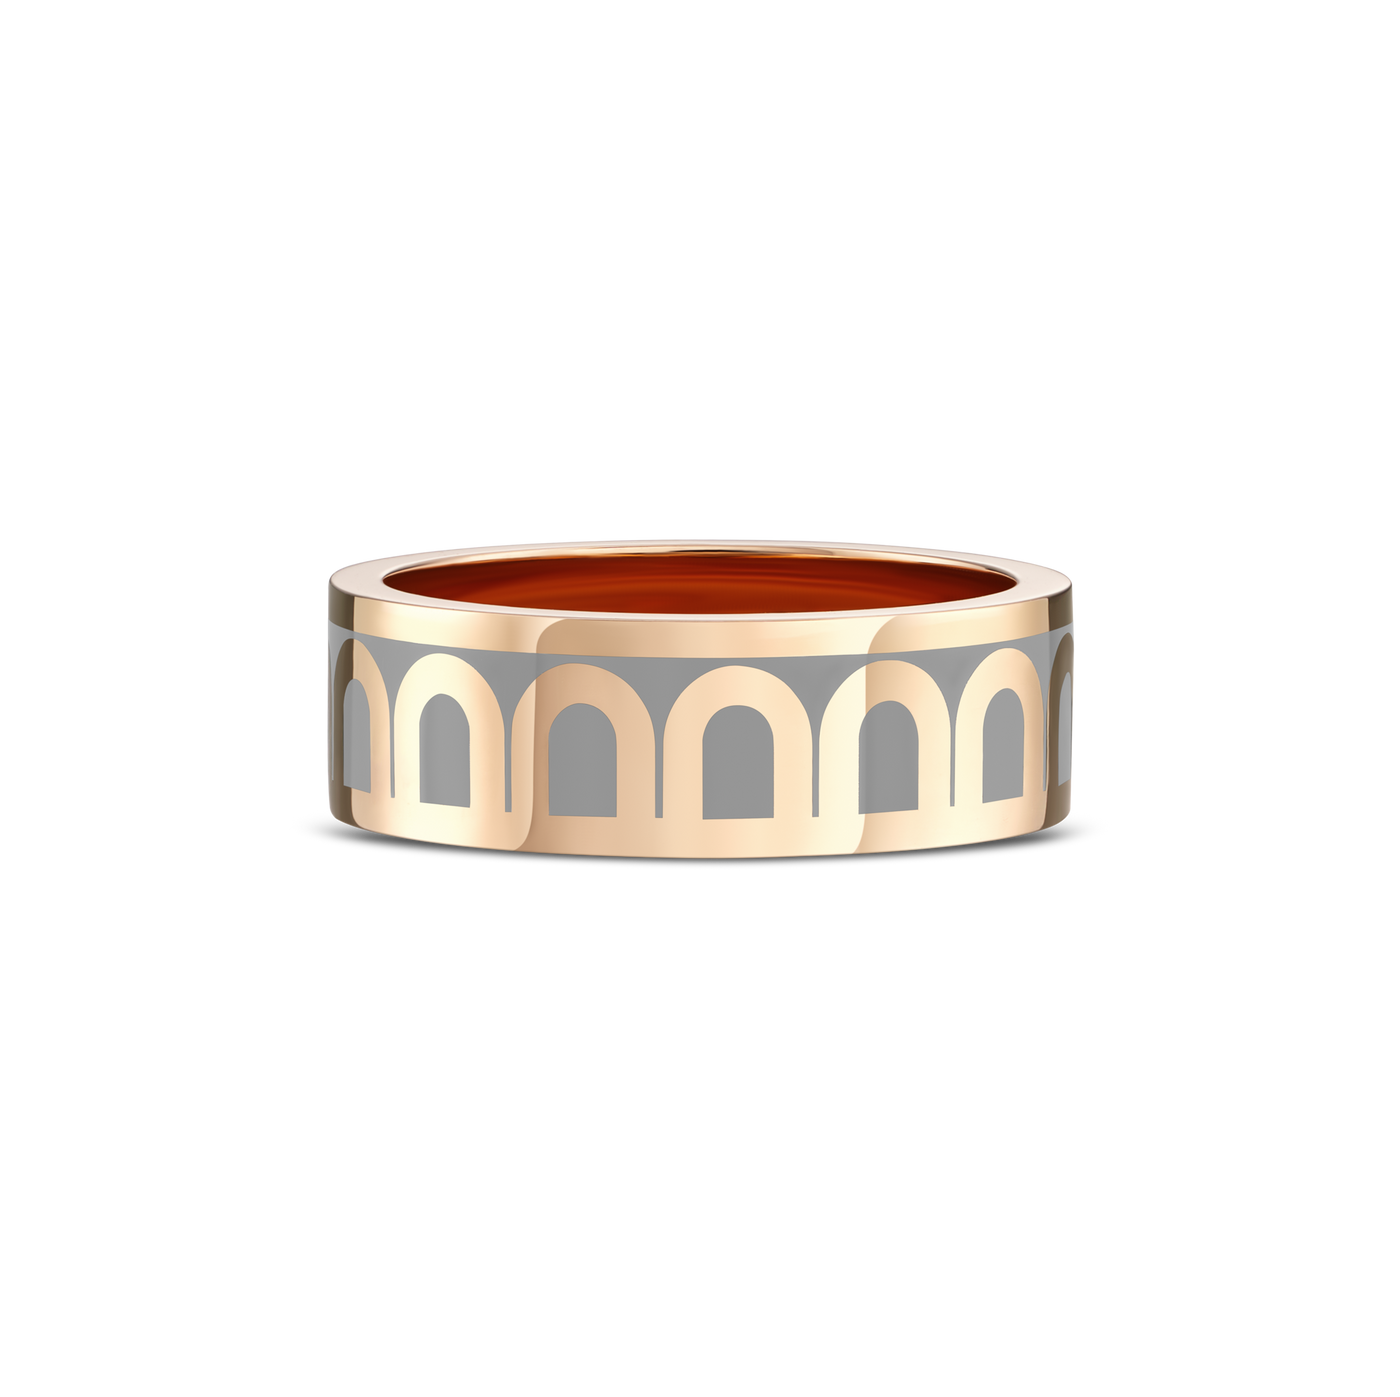 L'Arc de DAVIDOR Ring MM, 18k Rose Gold with Anthracite Lacquered Ceramic - DAVIDOR